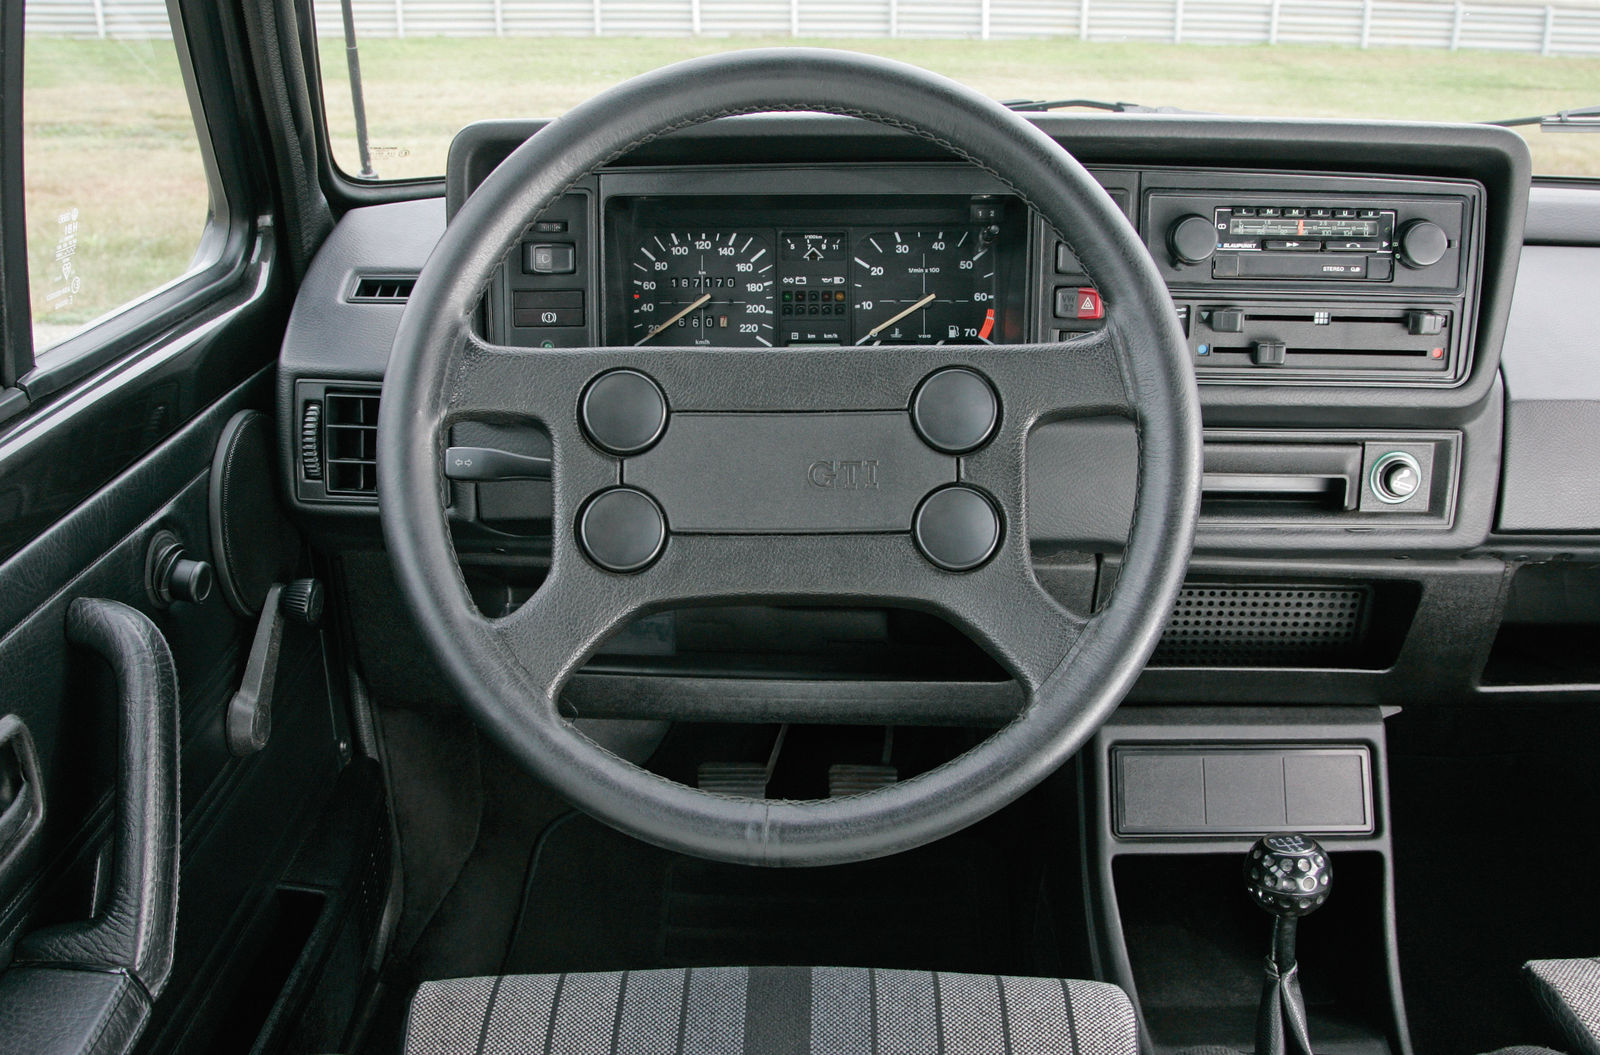 The Volkswagen Original GTI Pirelli of 1983